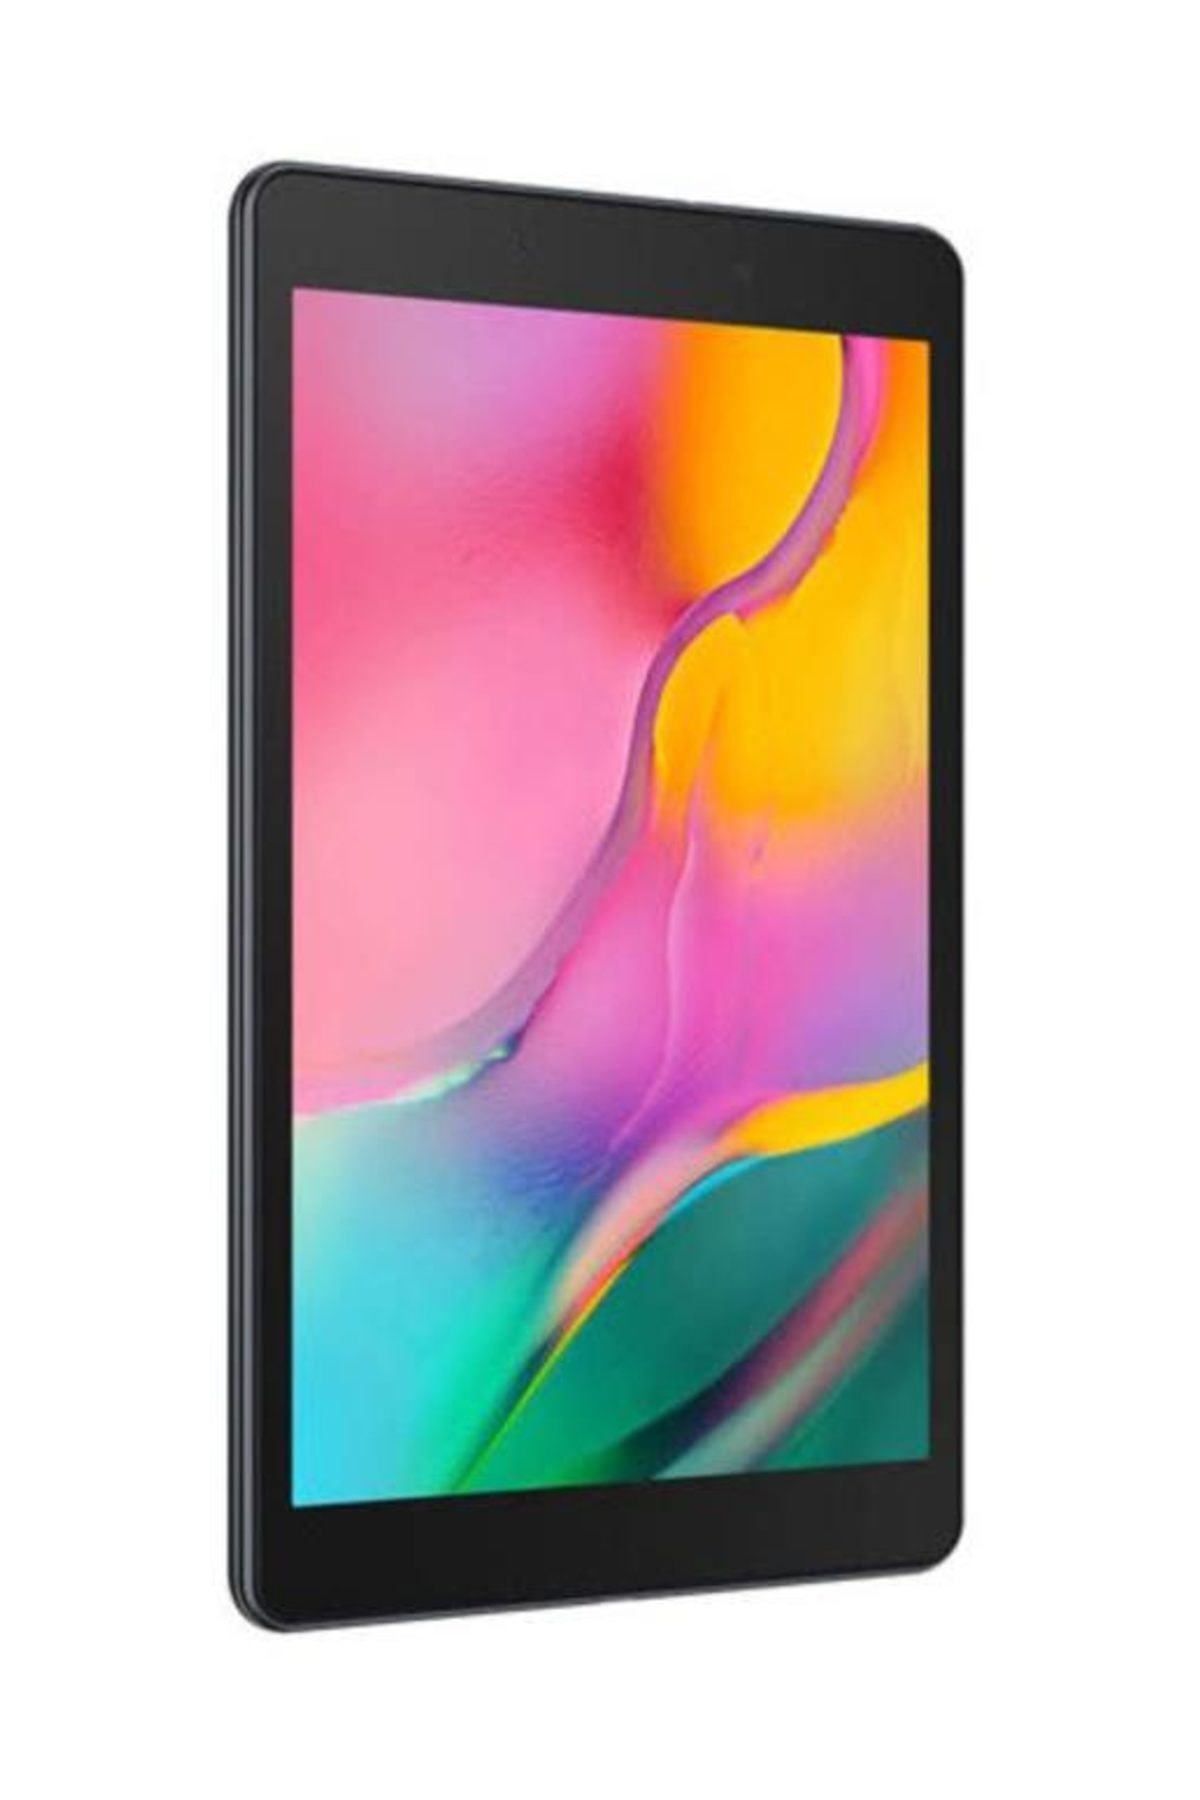 Galaxy Tab A 8 SM-T290 32GB Tablet Siyah